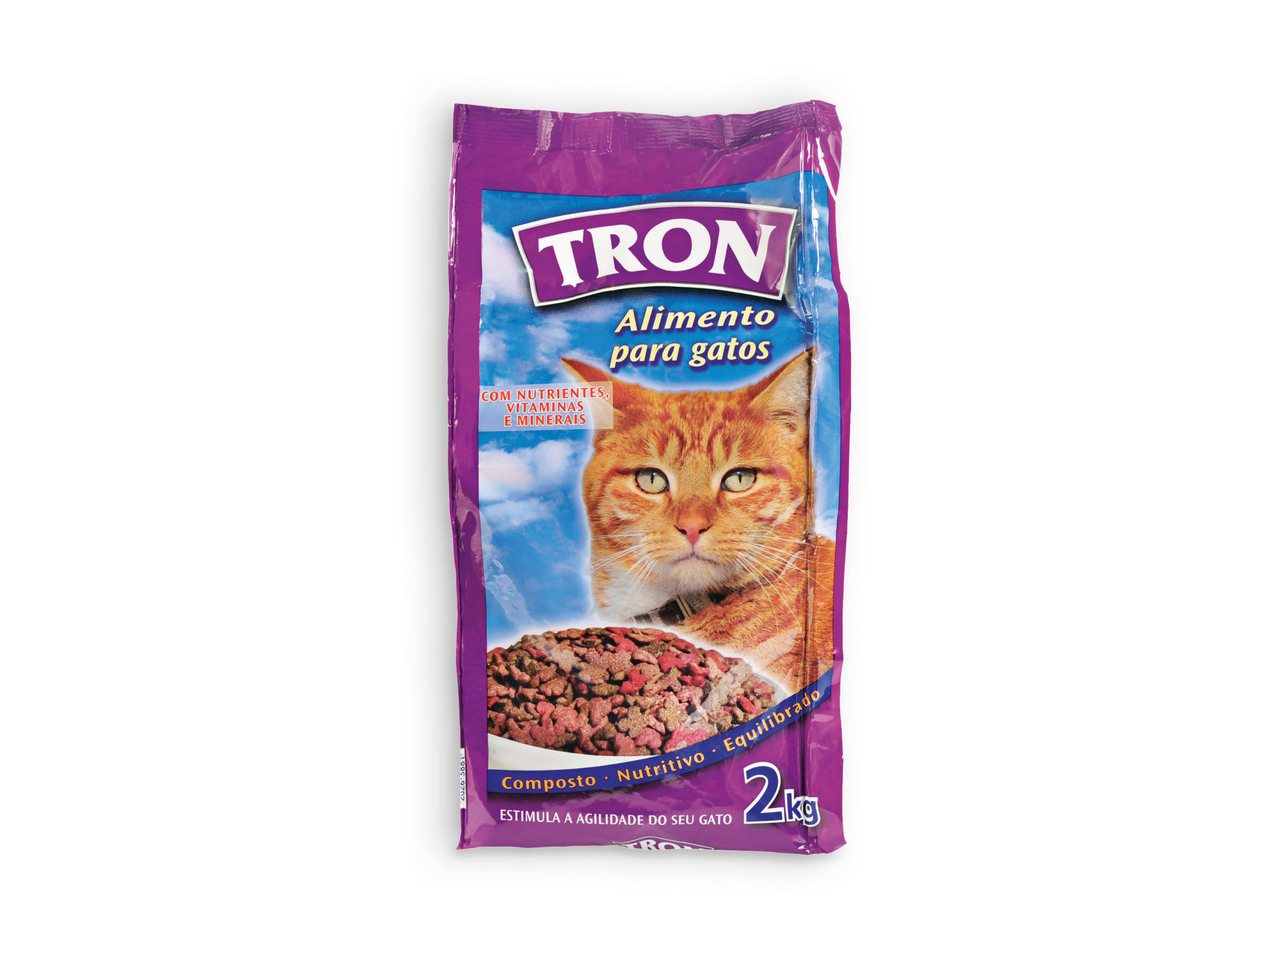 TRON(R) Alimento para Gatos